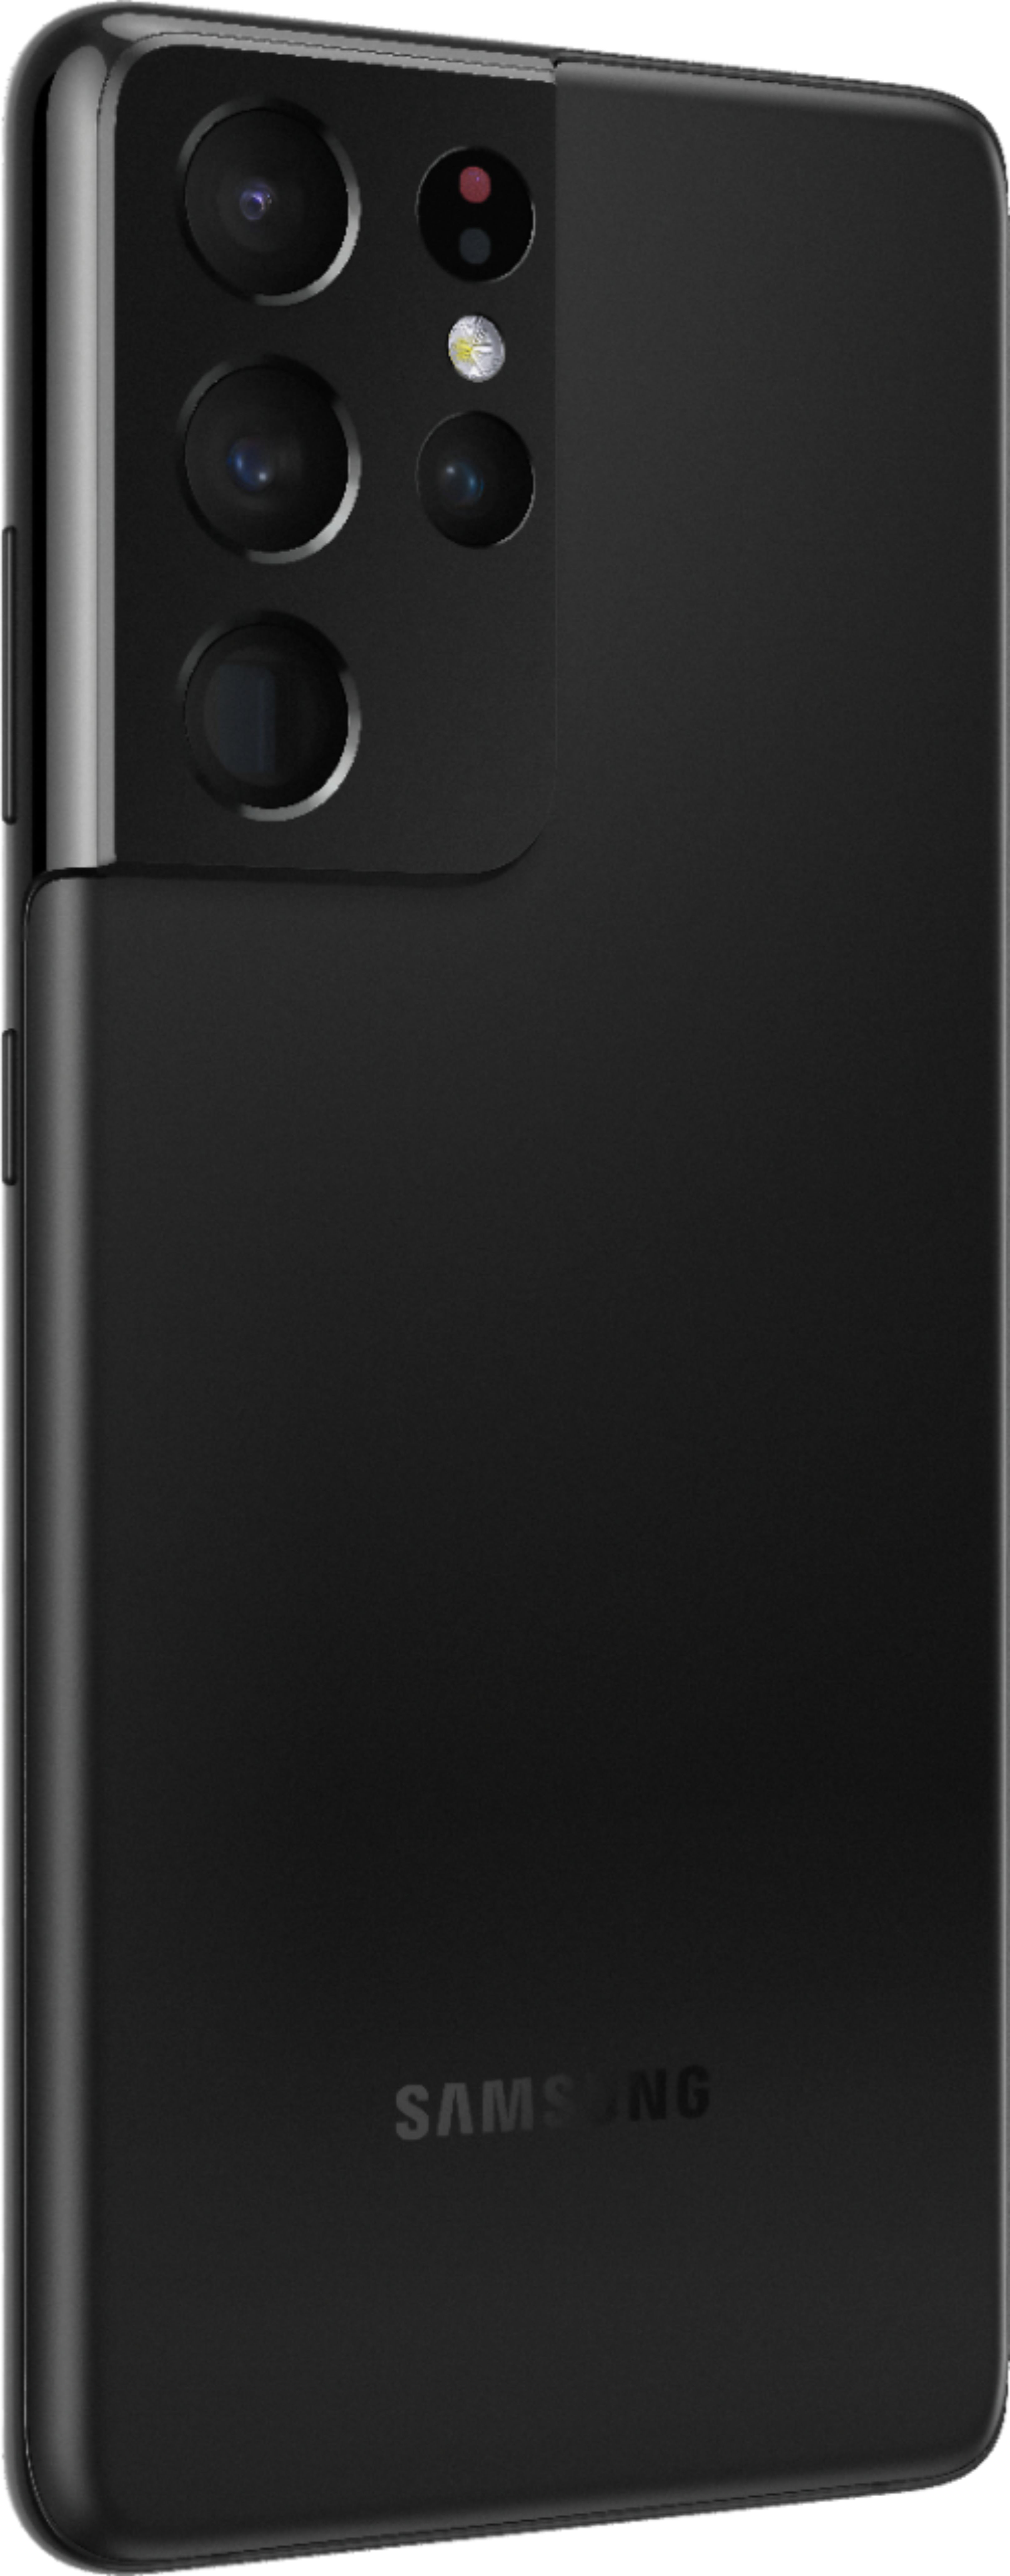 Smartphone Samsung Galaxy S21 Ultra 5G 256GB 12GB RAM Preto - Luxgolden